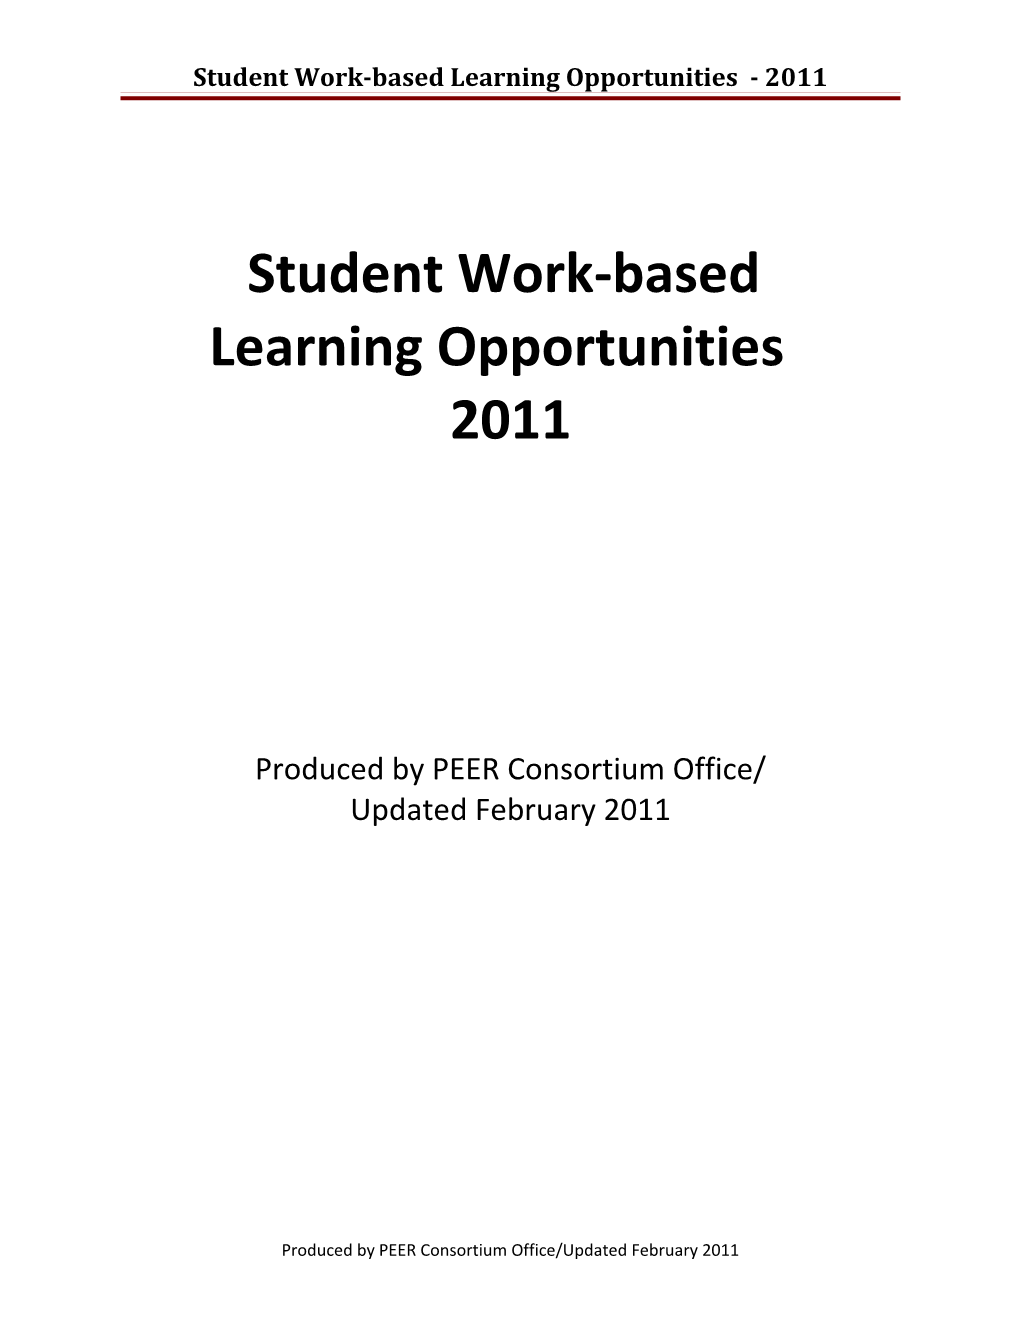 PEER Consortium Student Work-Based Learning Opportunities